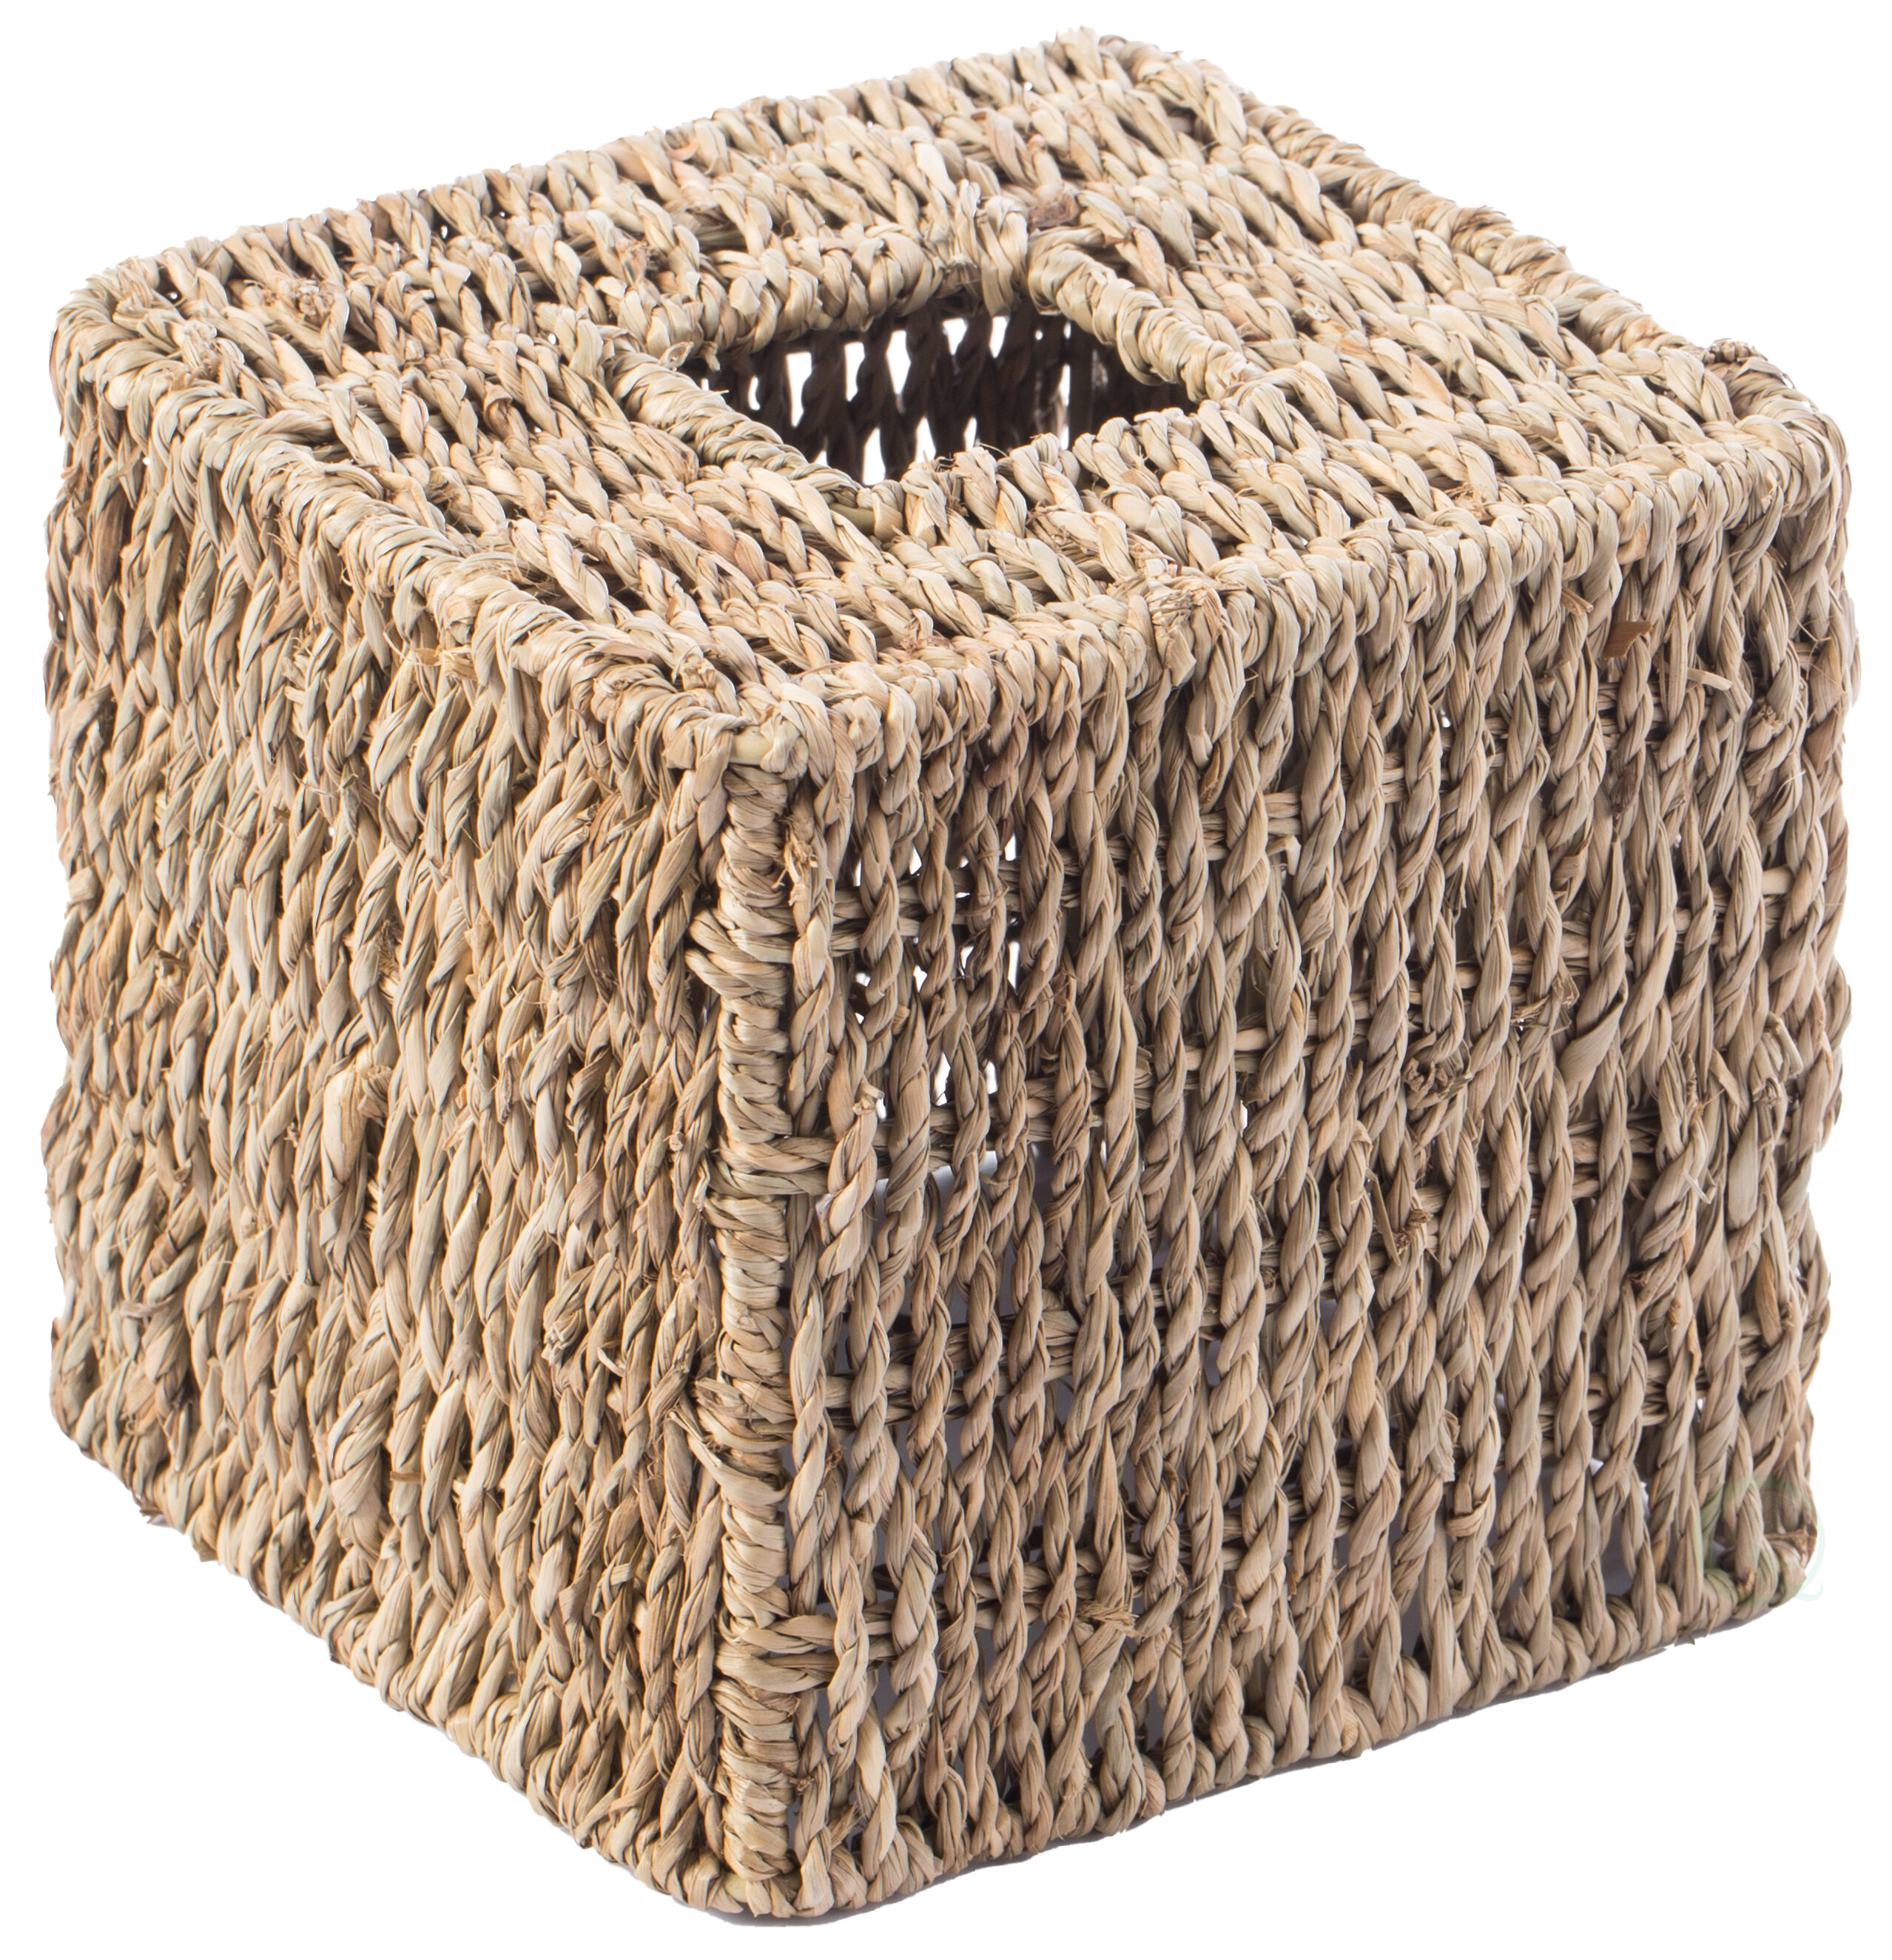 Original homeloo Woven Seagrass Straw Square Tissue Box Cover Holder 